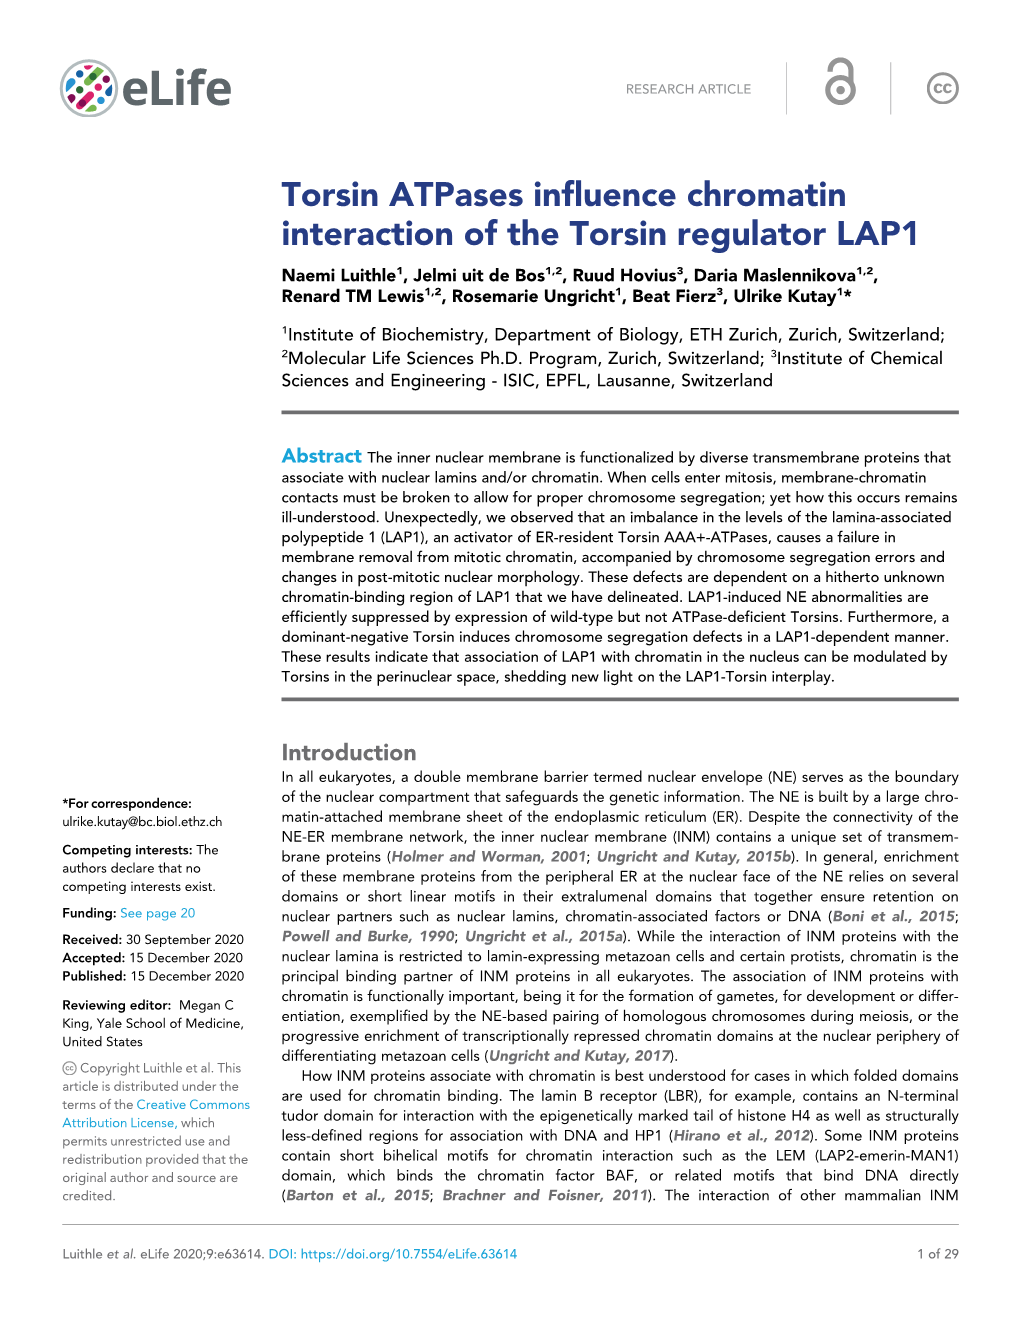 Torsin Atpases Influence Chromatin Interaction of the Torsin Regulator LAP1